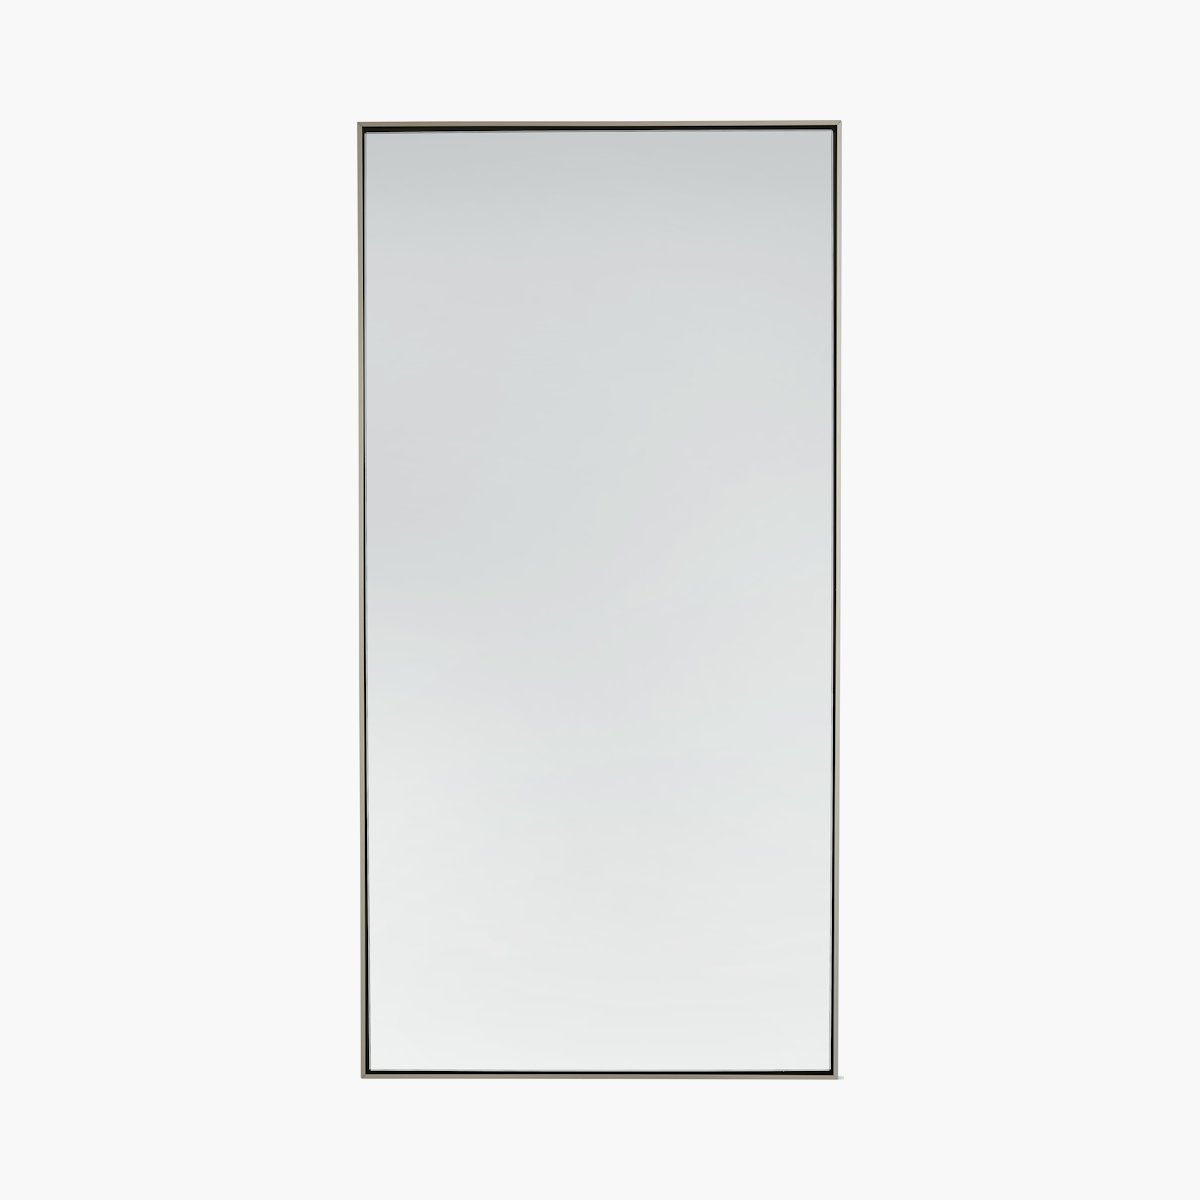 Mondrian Wall Mirror, 22"x44"